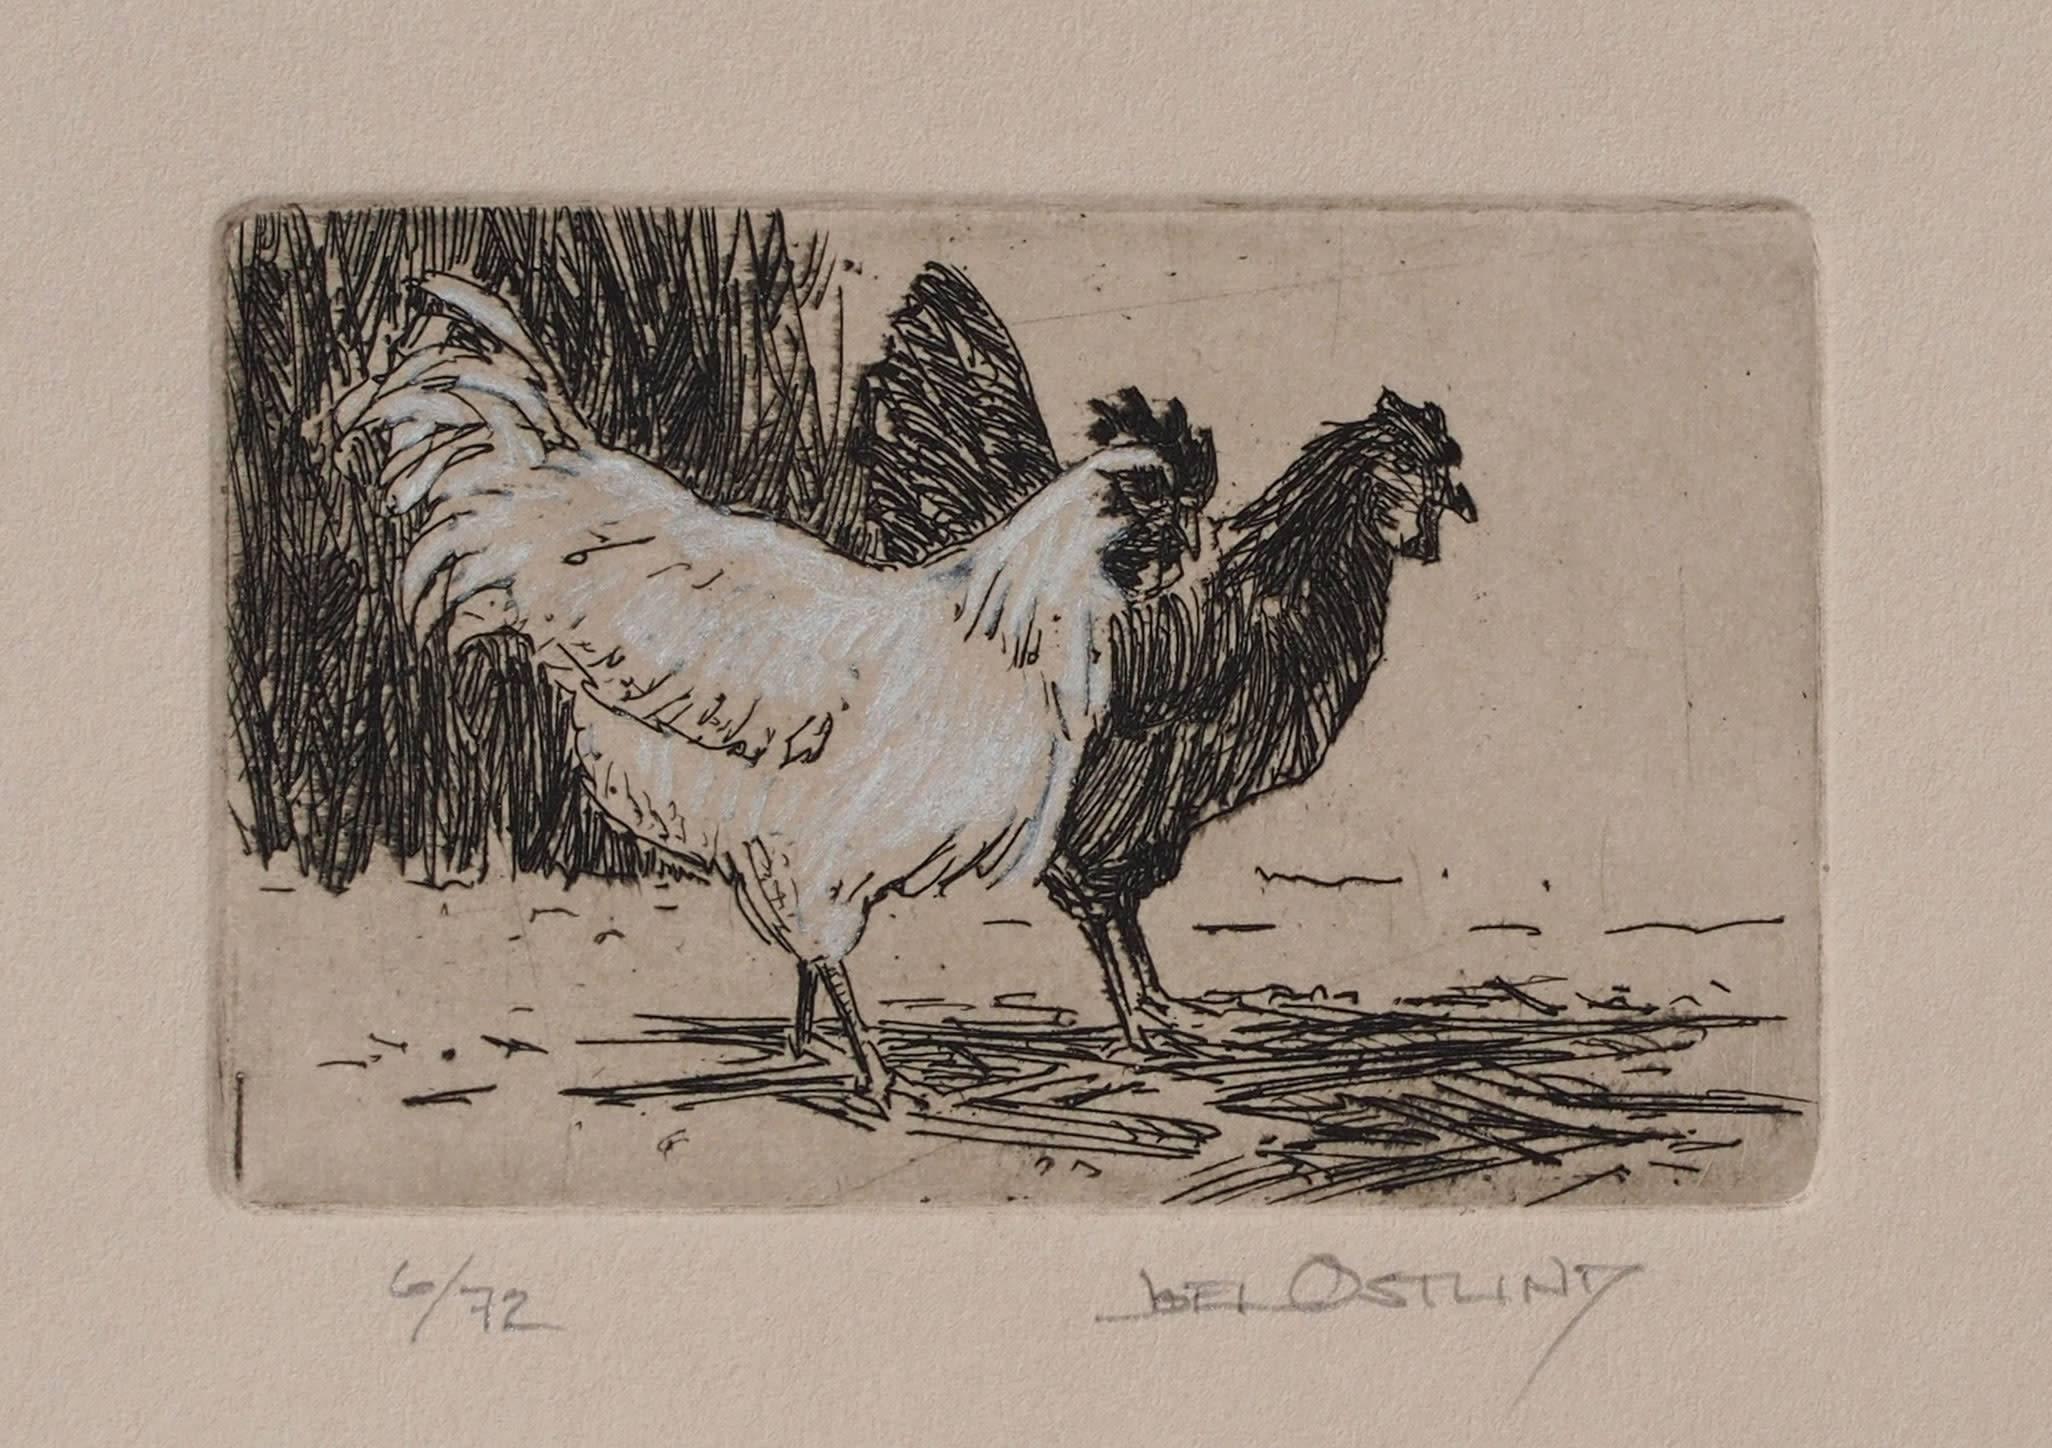 Joel Ostlind Animal Print - Salt and Pepper 6/72 (chickens, animals, etching, portrait)